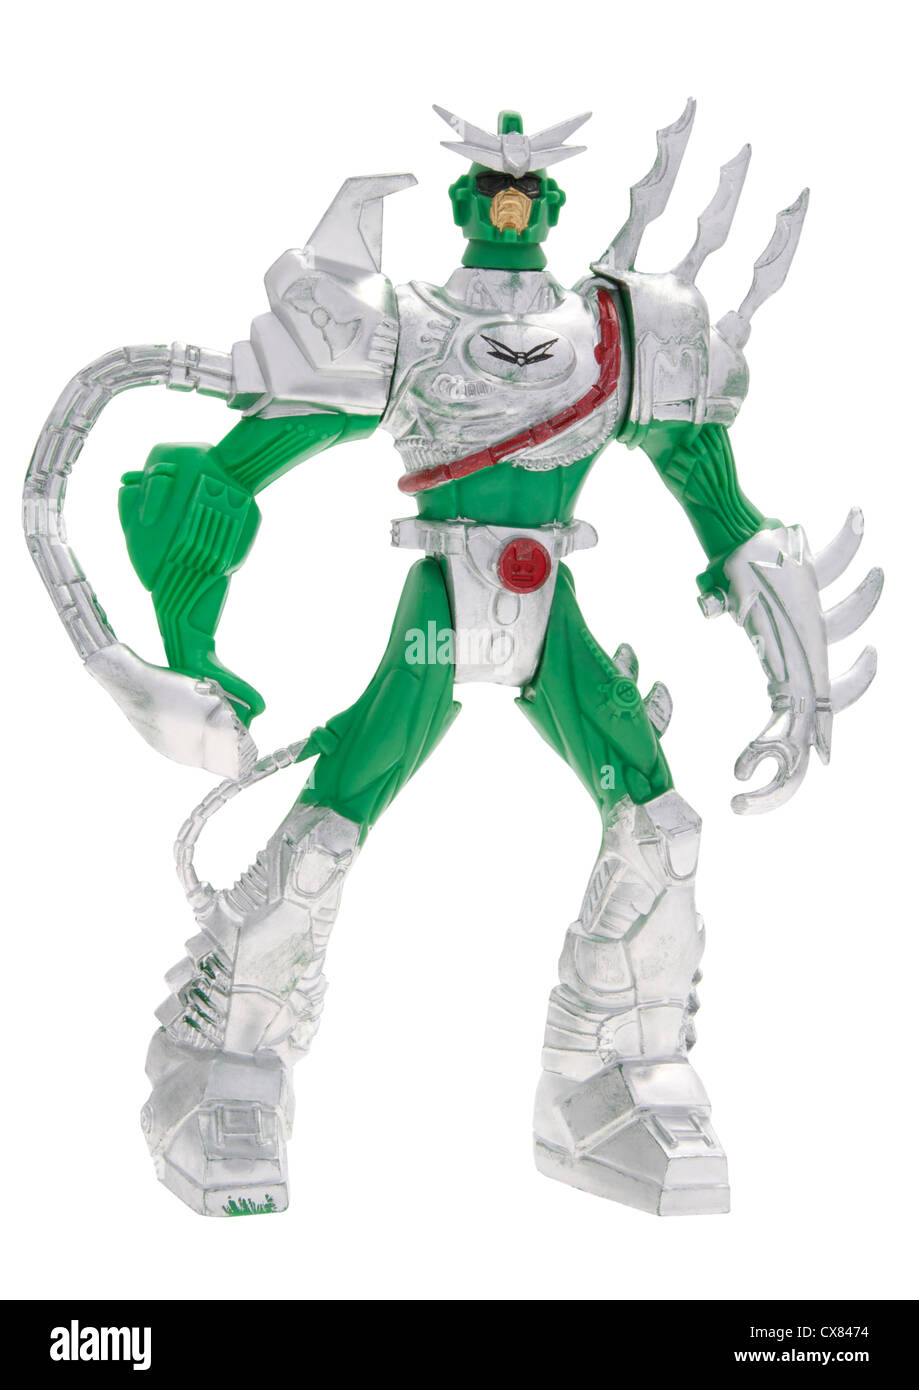 Plastic fantasy robot action figure toy on white background Stock Photo